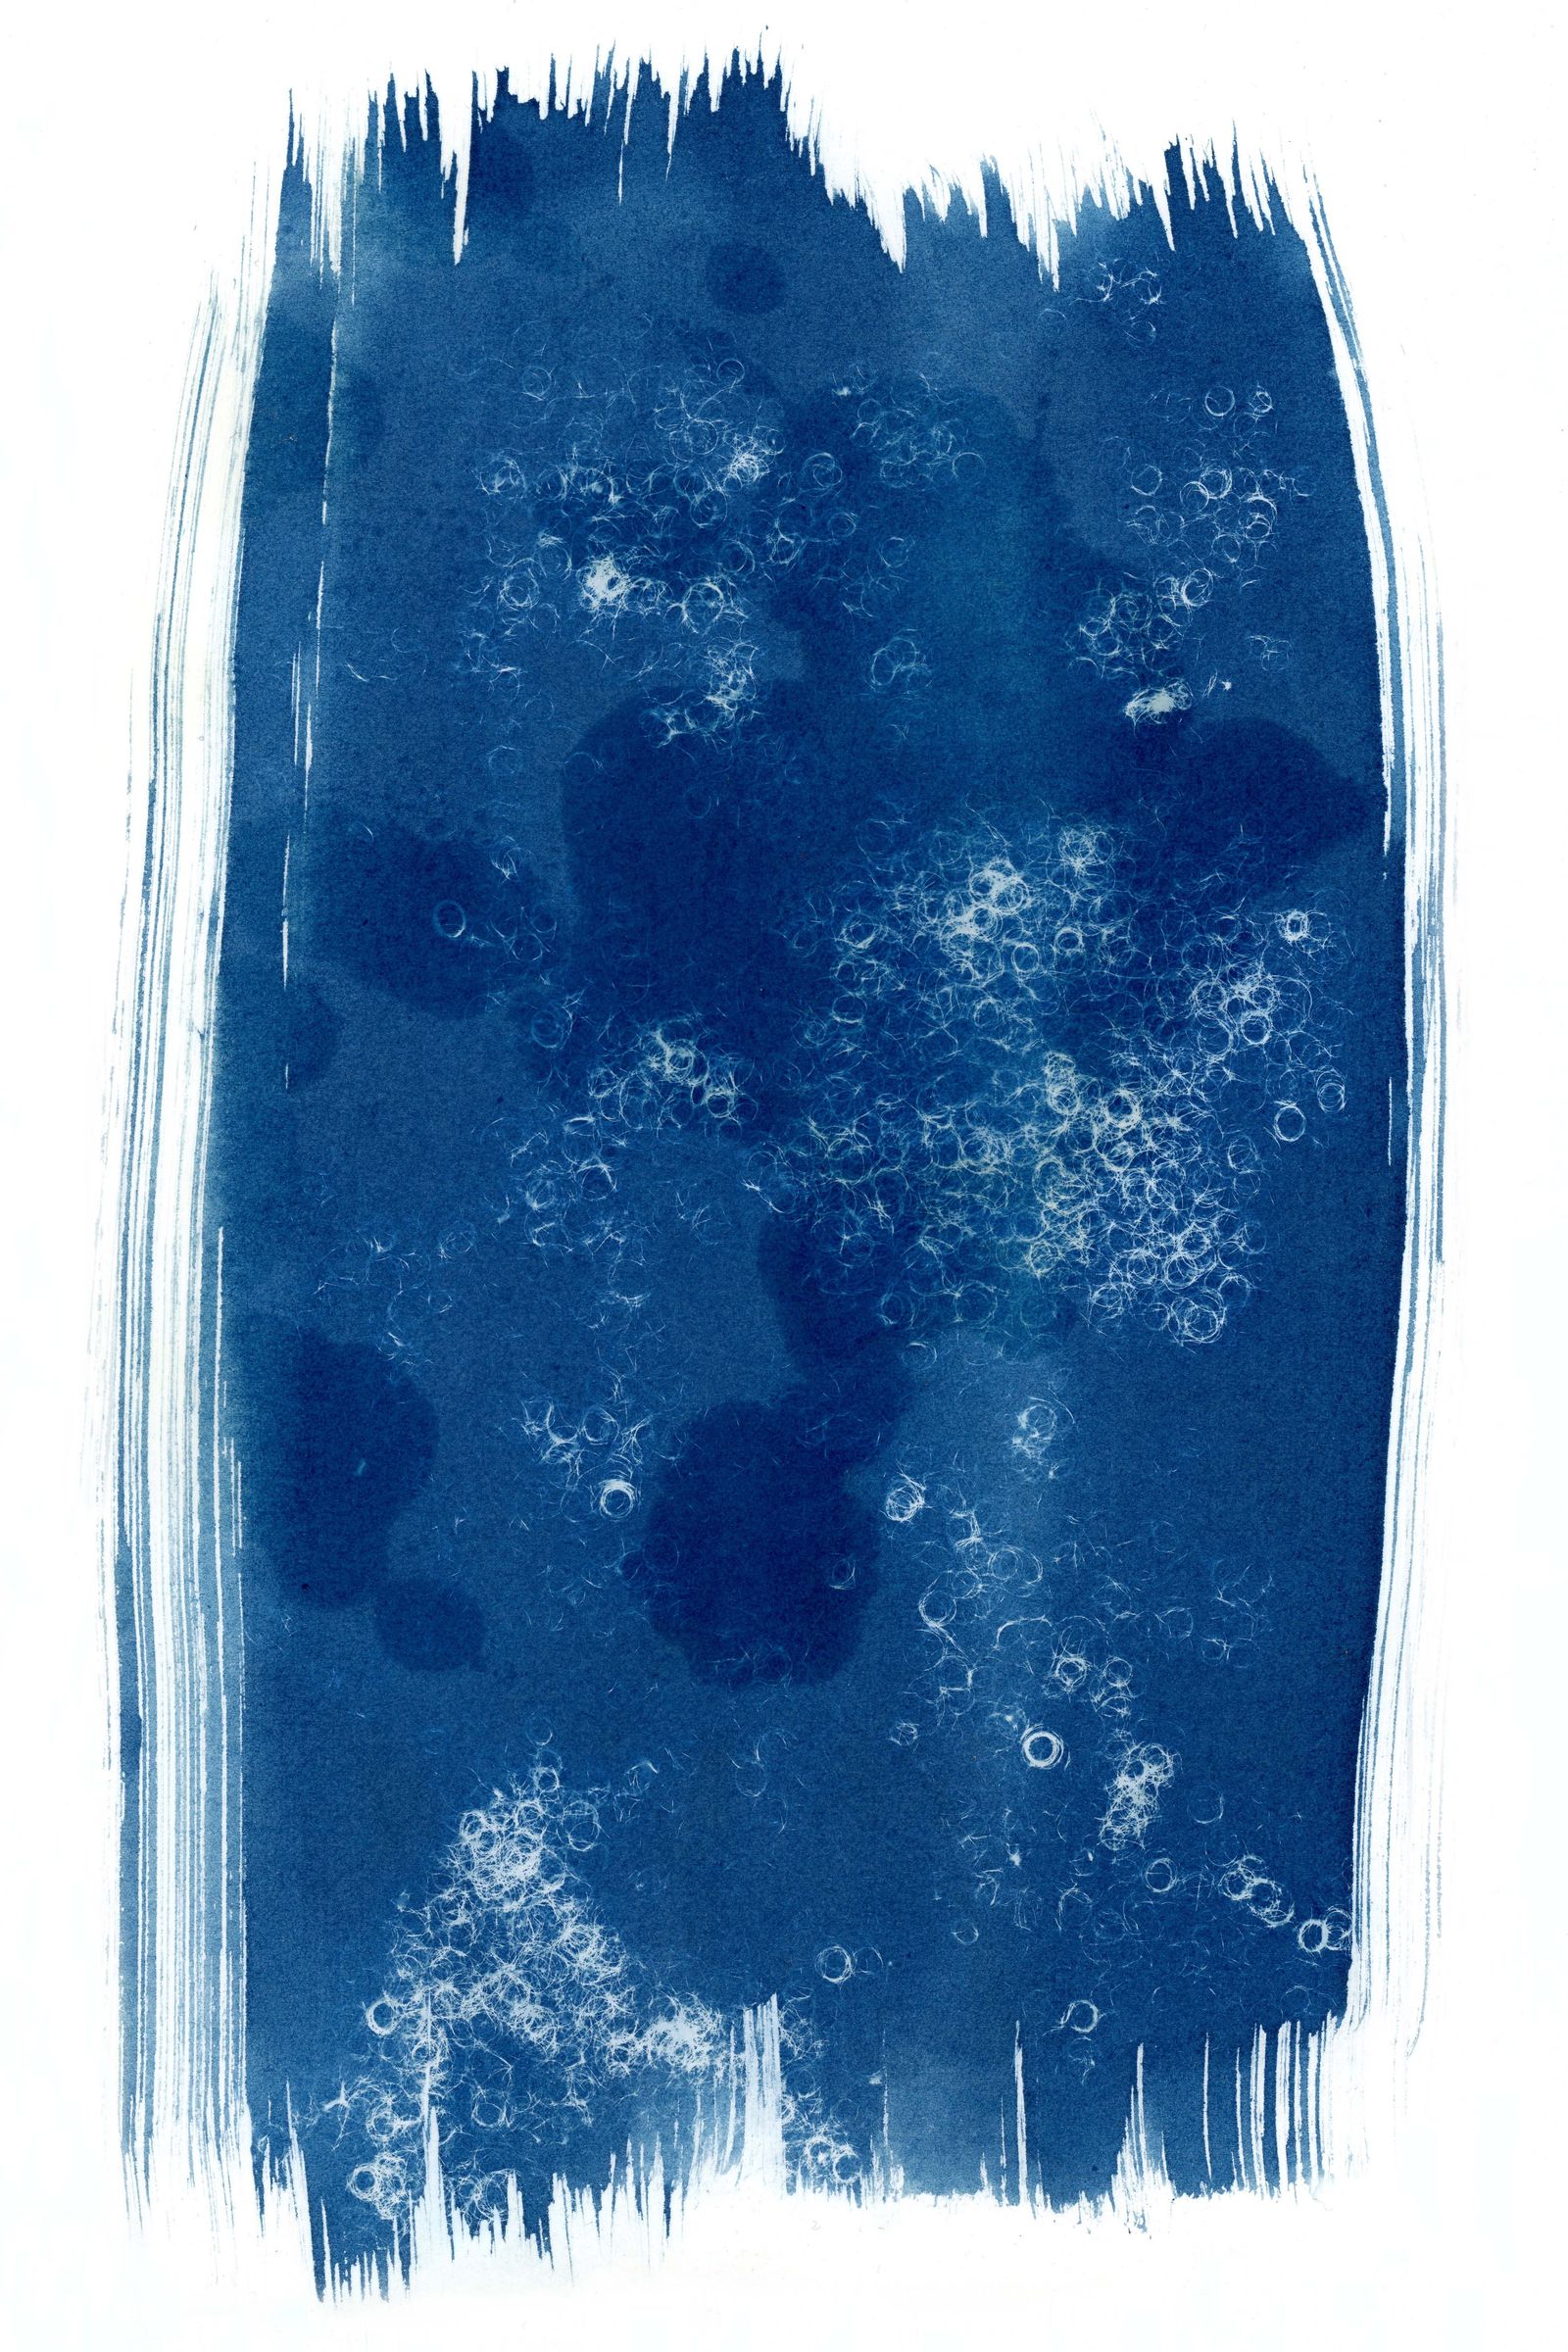 © Melanie Issaka - Blue Magic 1, Cyanotype on Somerset paper, 30x12cm, 2021